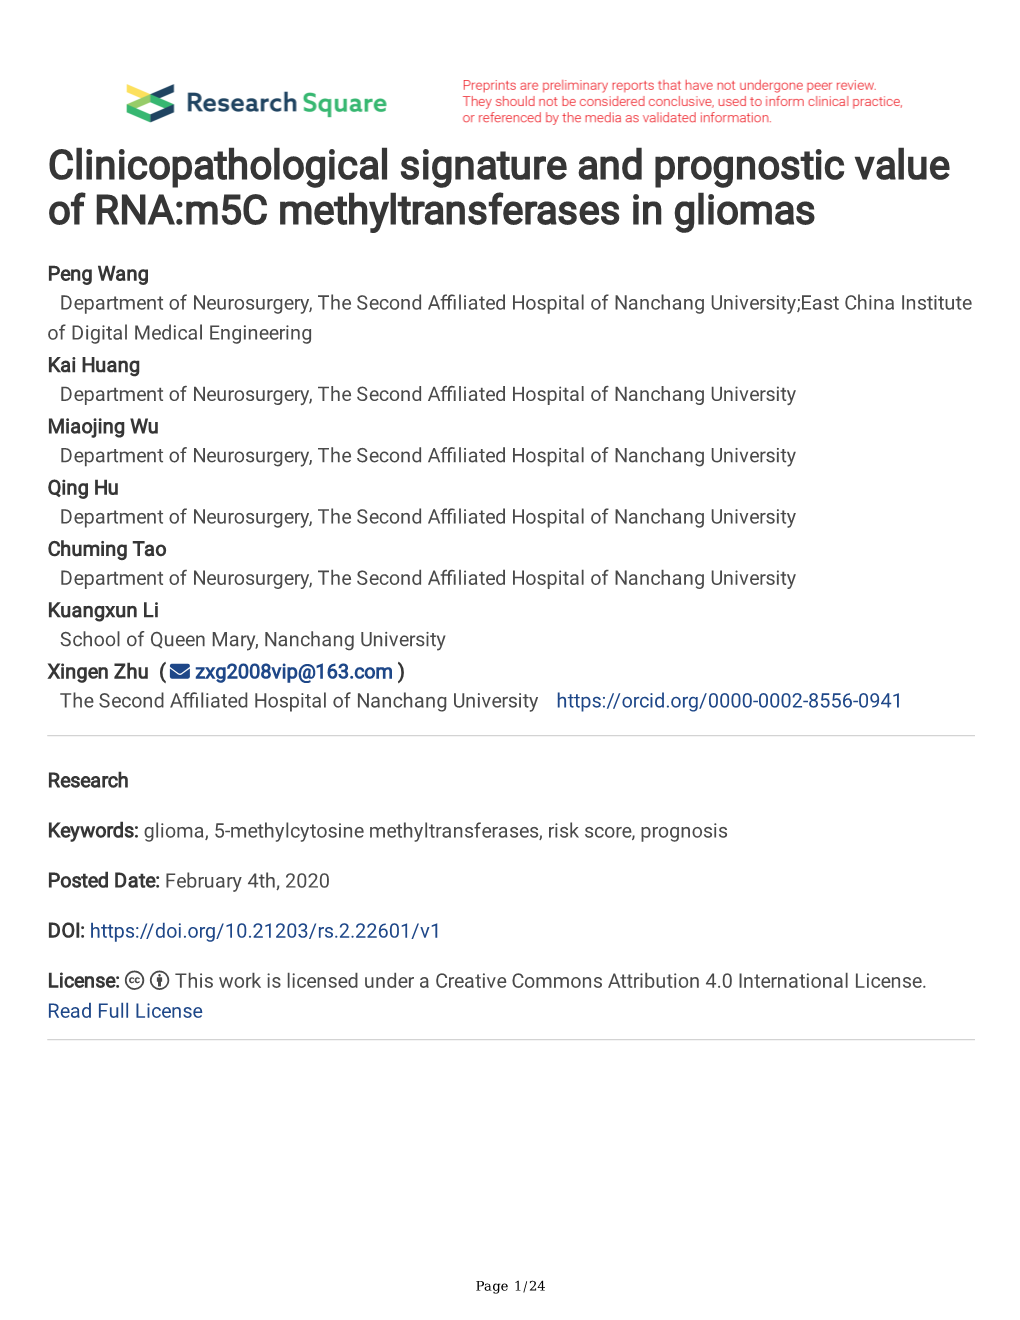 Clinicopathological Signature and Prognostic Value of RNA:M5c Methyltransferases in Gliomas